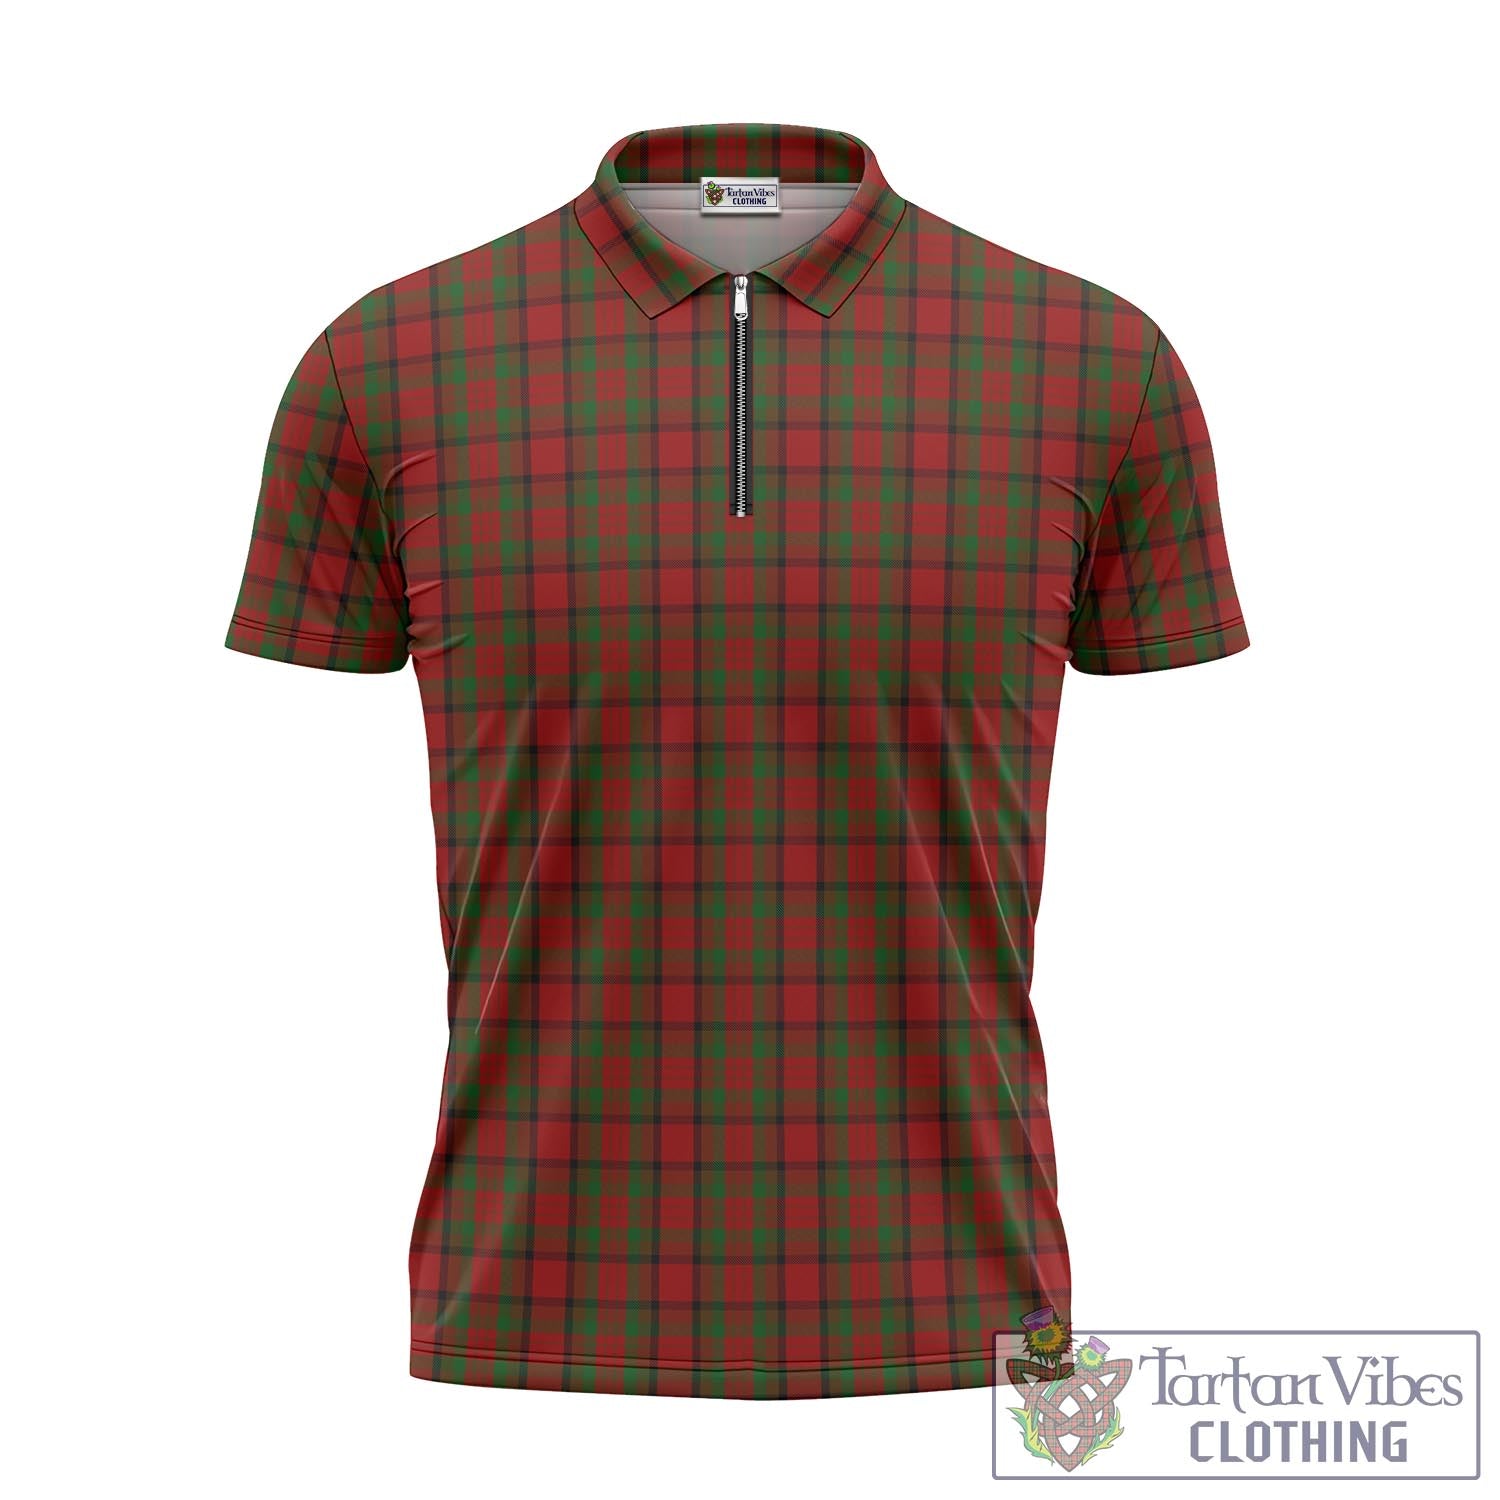 Tartan Vibes Clothing Tipperary County Ireland Tartan Zipper Polo Shirt